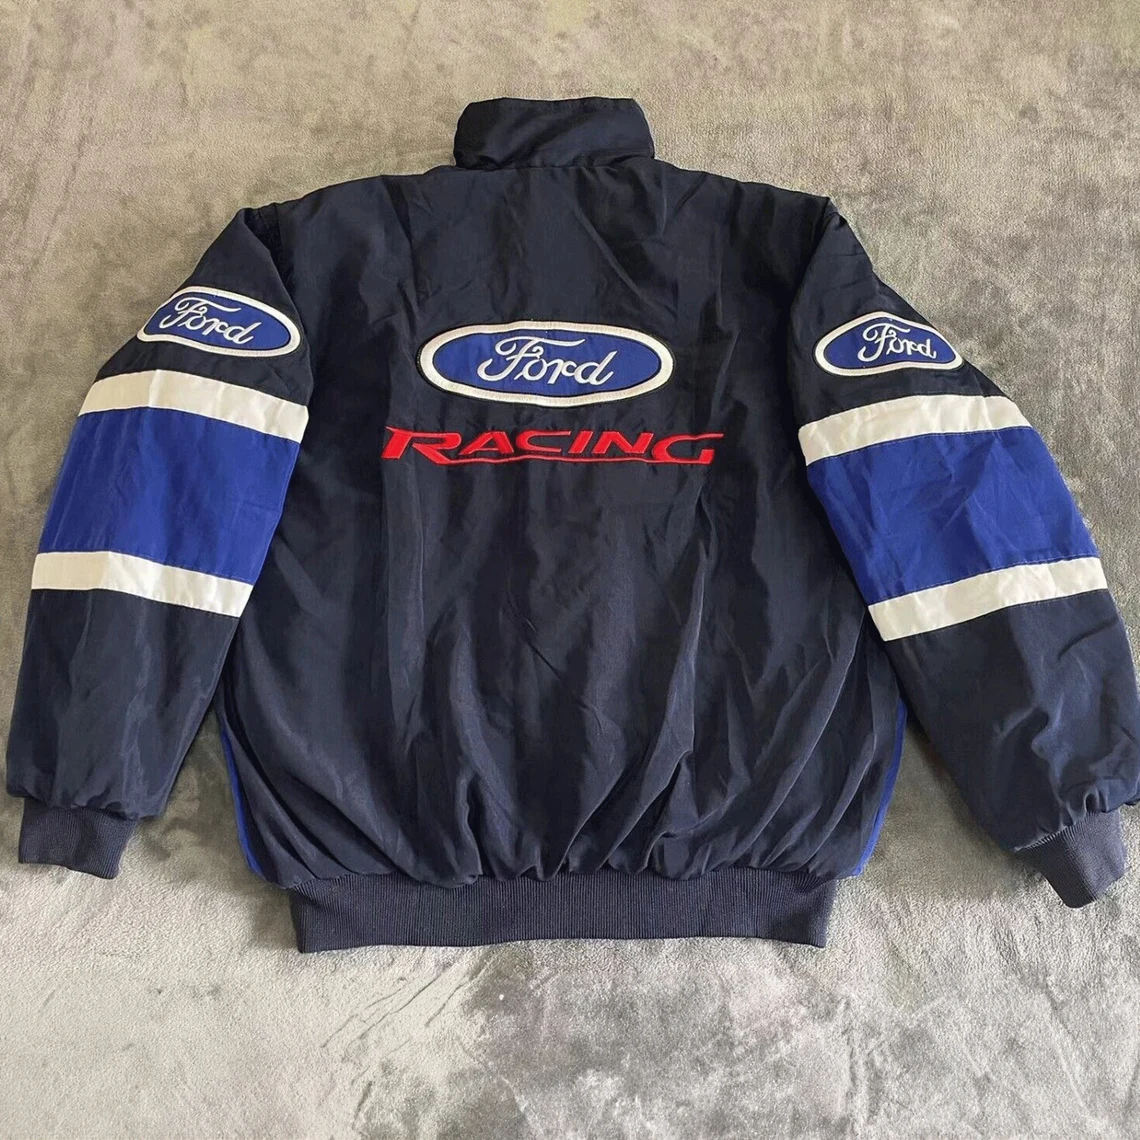 Ford Racing Jacket with Cotton,Vintage Rare F1 Bomber Jacket,90s Streetwear Embroidered Jacket,Y2K Nascar Jacket,Blue Formula one jacket